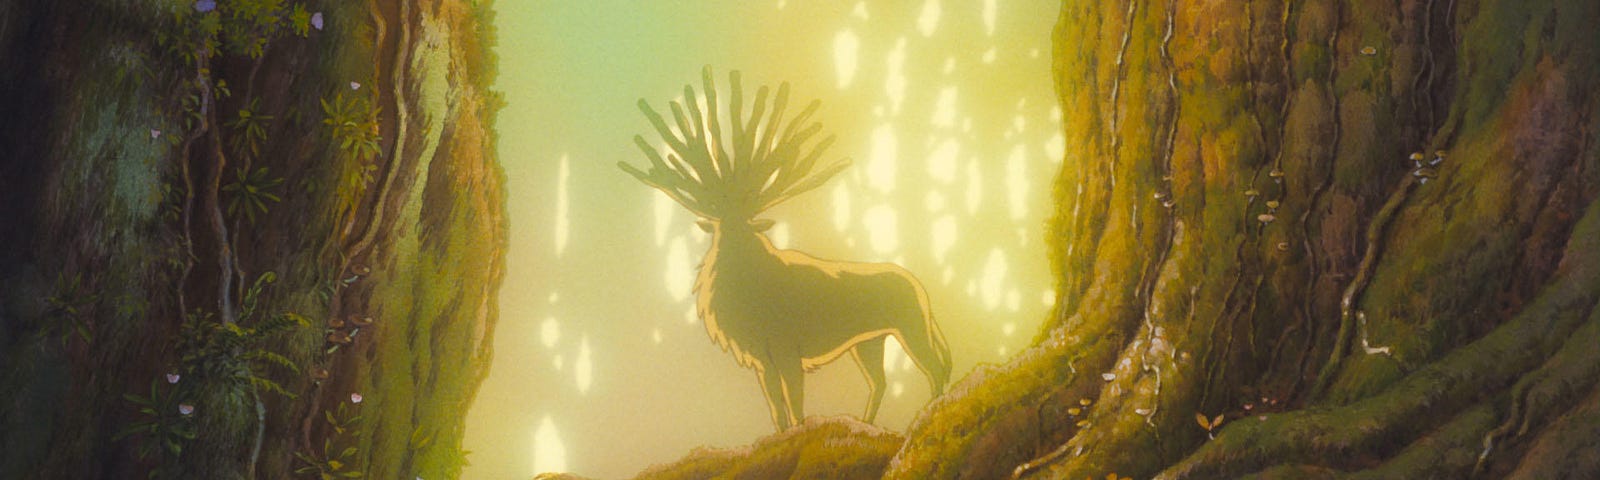 Scene from the Princess Mononoke, Source: Studio Ghibli